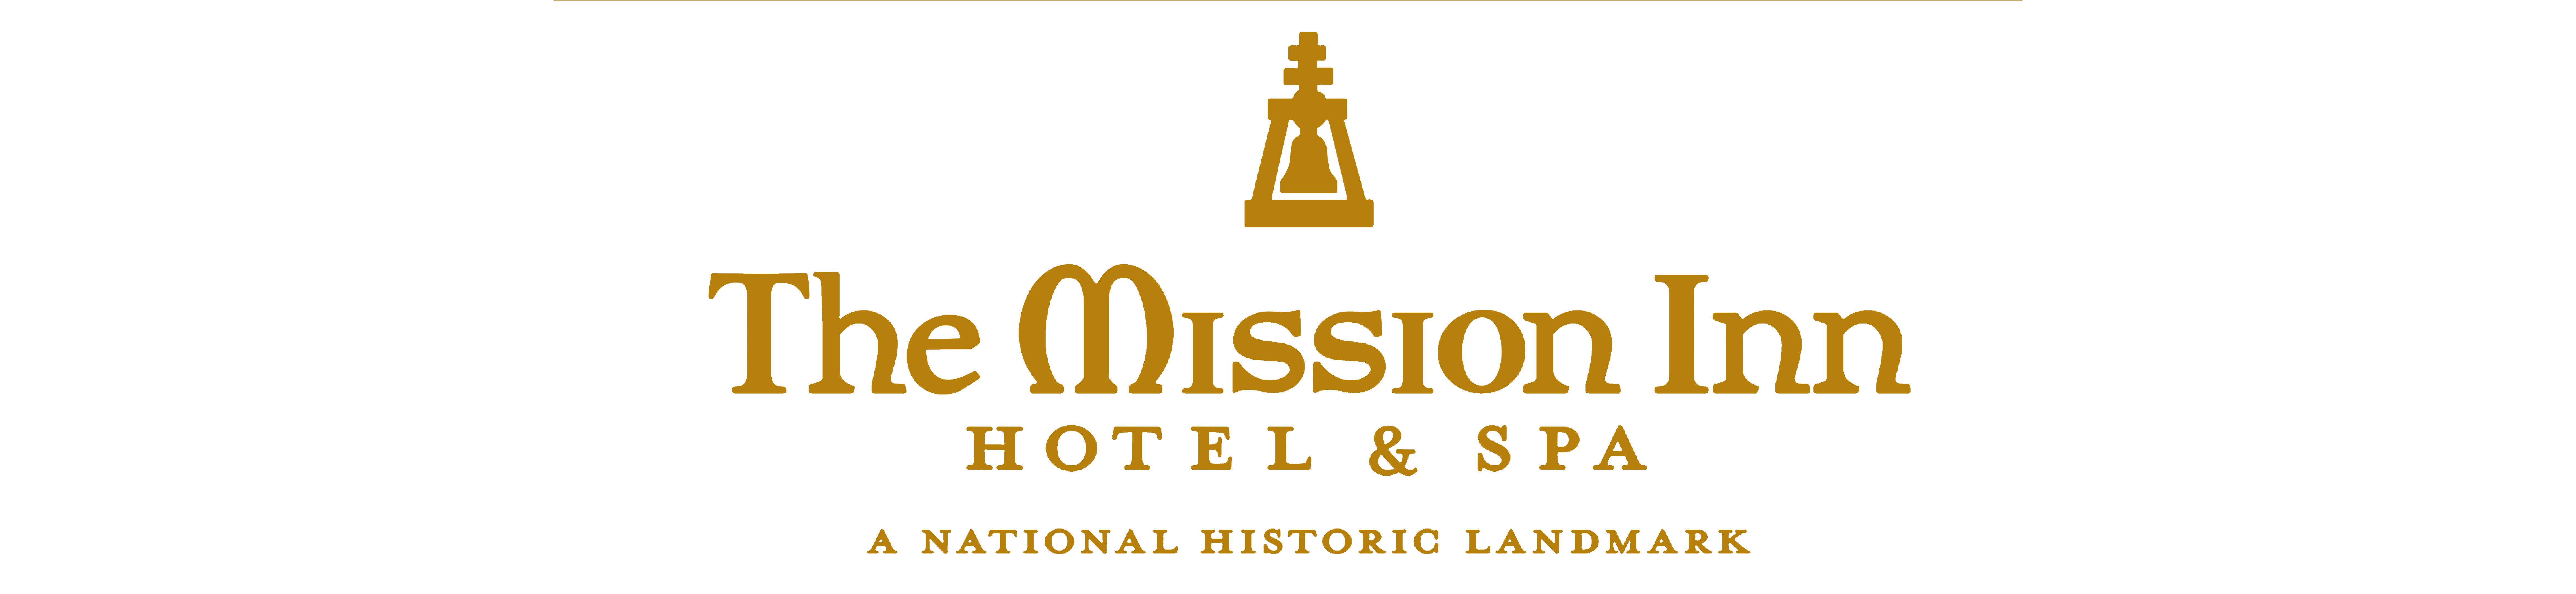 Mission Inn Hotel & Spa